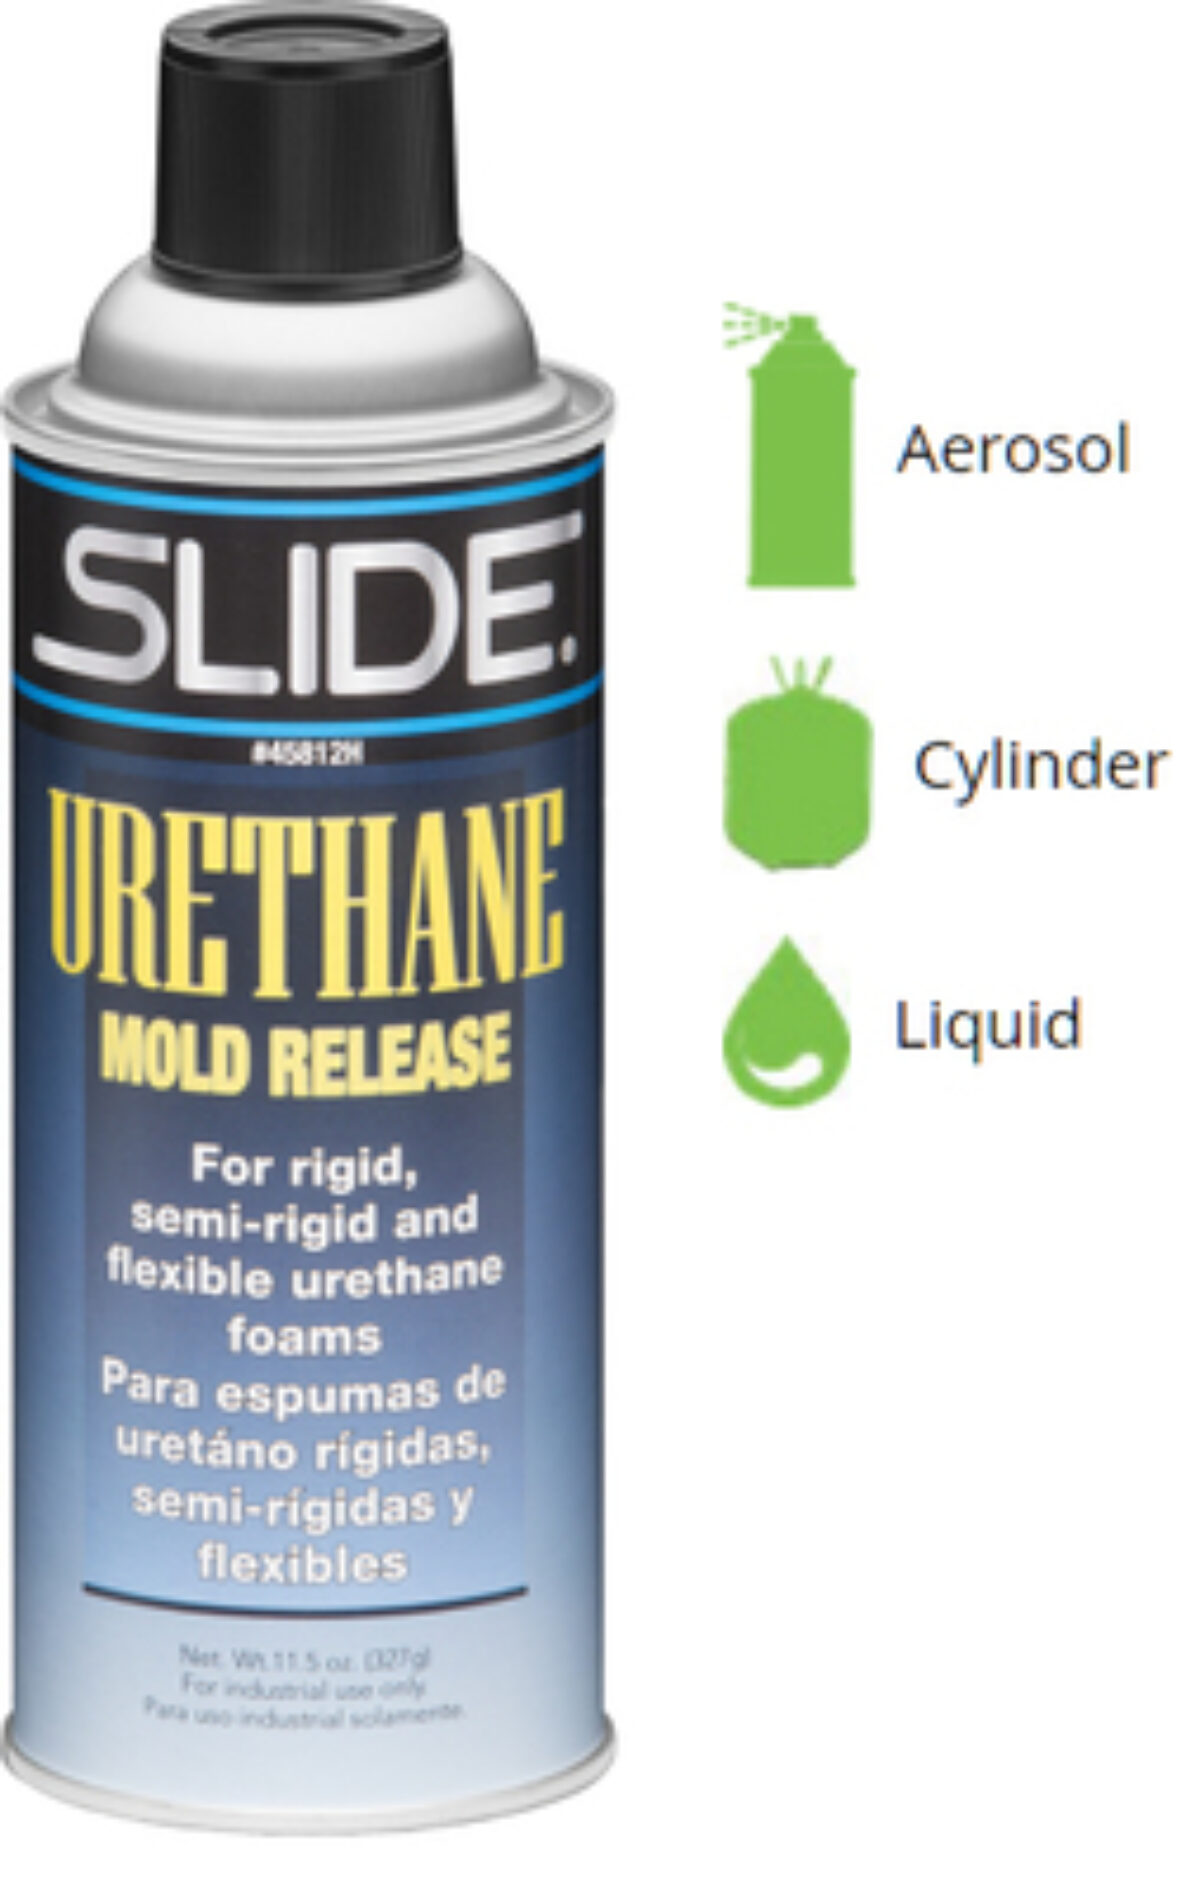 Slide 40510P Econo-Spray® No.1 Mold Release